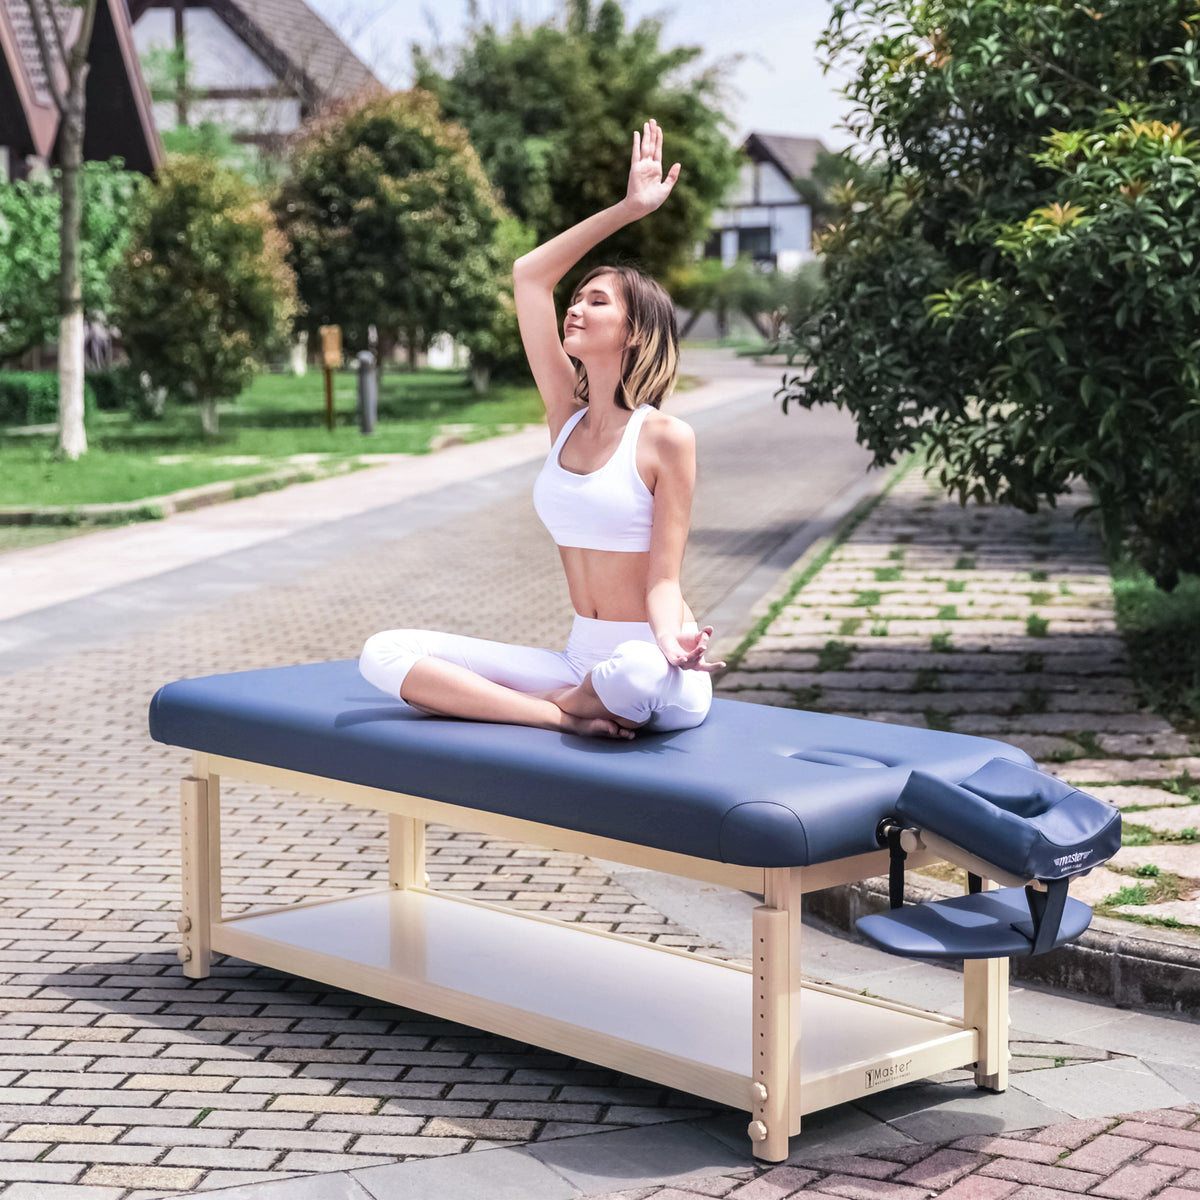 Master Massage - Laguna Stationary Massage Table Package 30&quot; - Superb Massage Tables